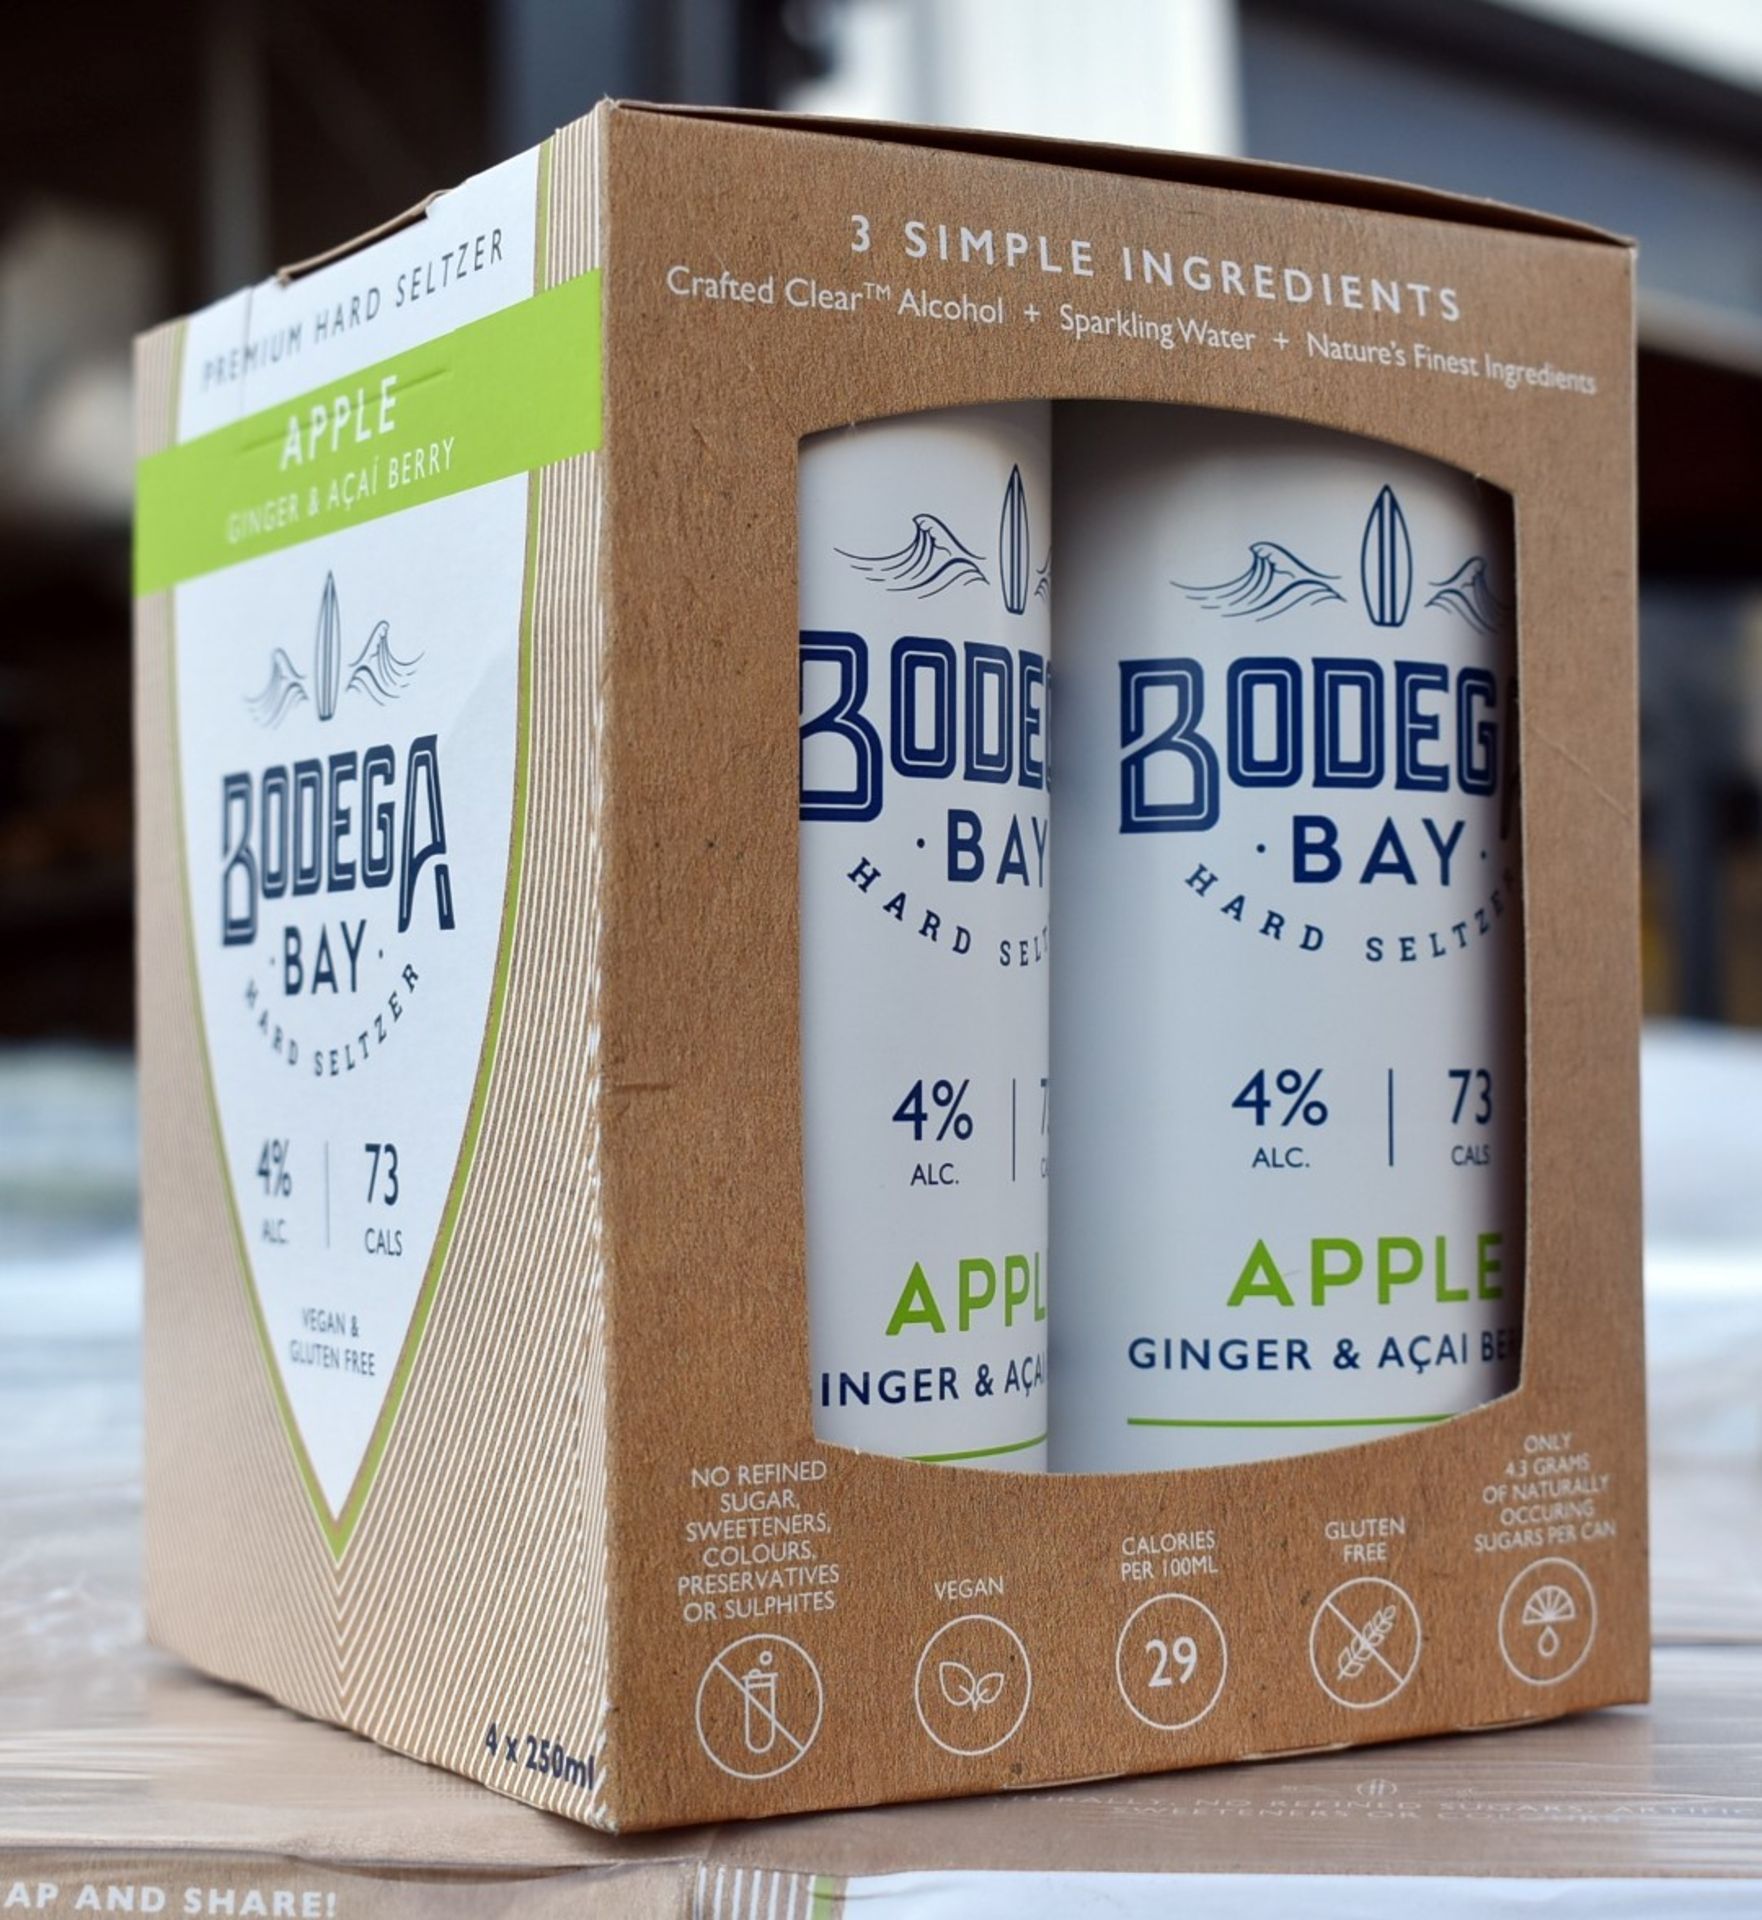 24 x Bodega Bay Hard Seltzer 250ml Alcoholic Sparkling Water Drinks - Apple Ginger & Acai Berry - 4% - Image 6 of 10